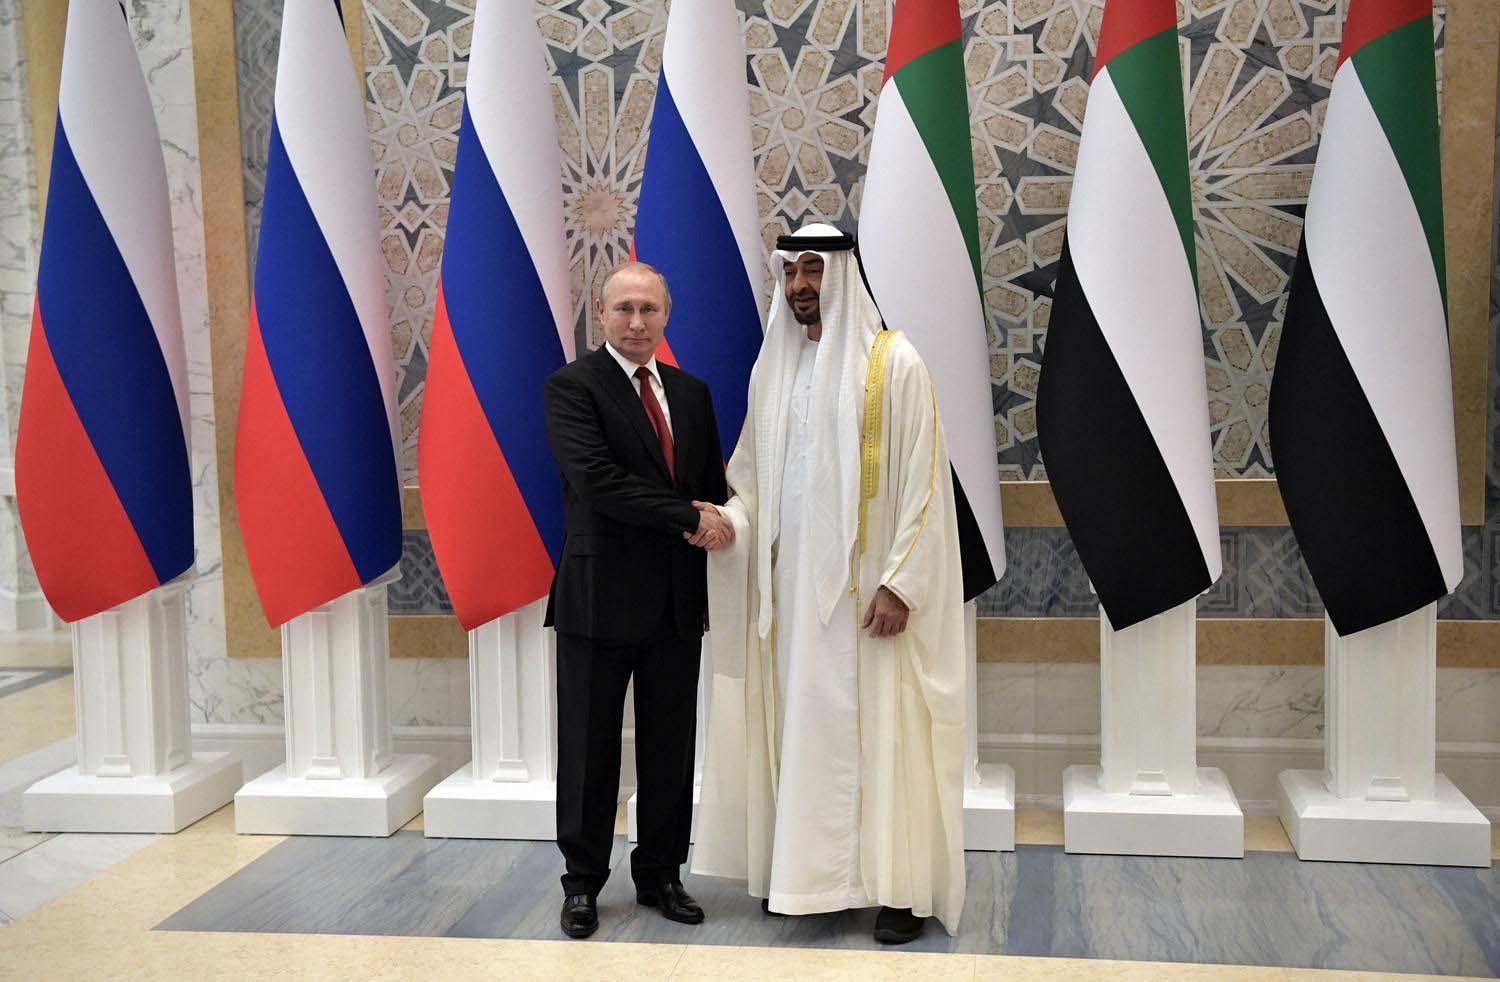 Putin greeted by Abu Dhabi's Crown Prince Mohammed bin Zayed Al-Nahyan